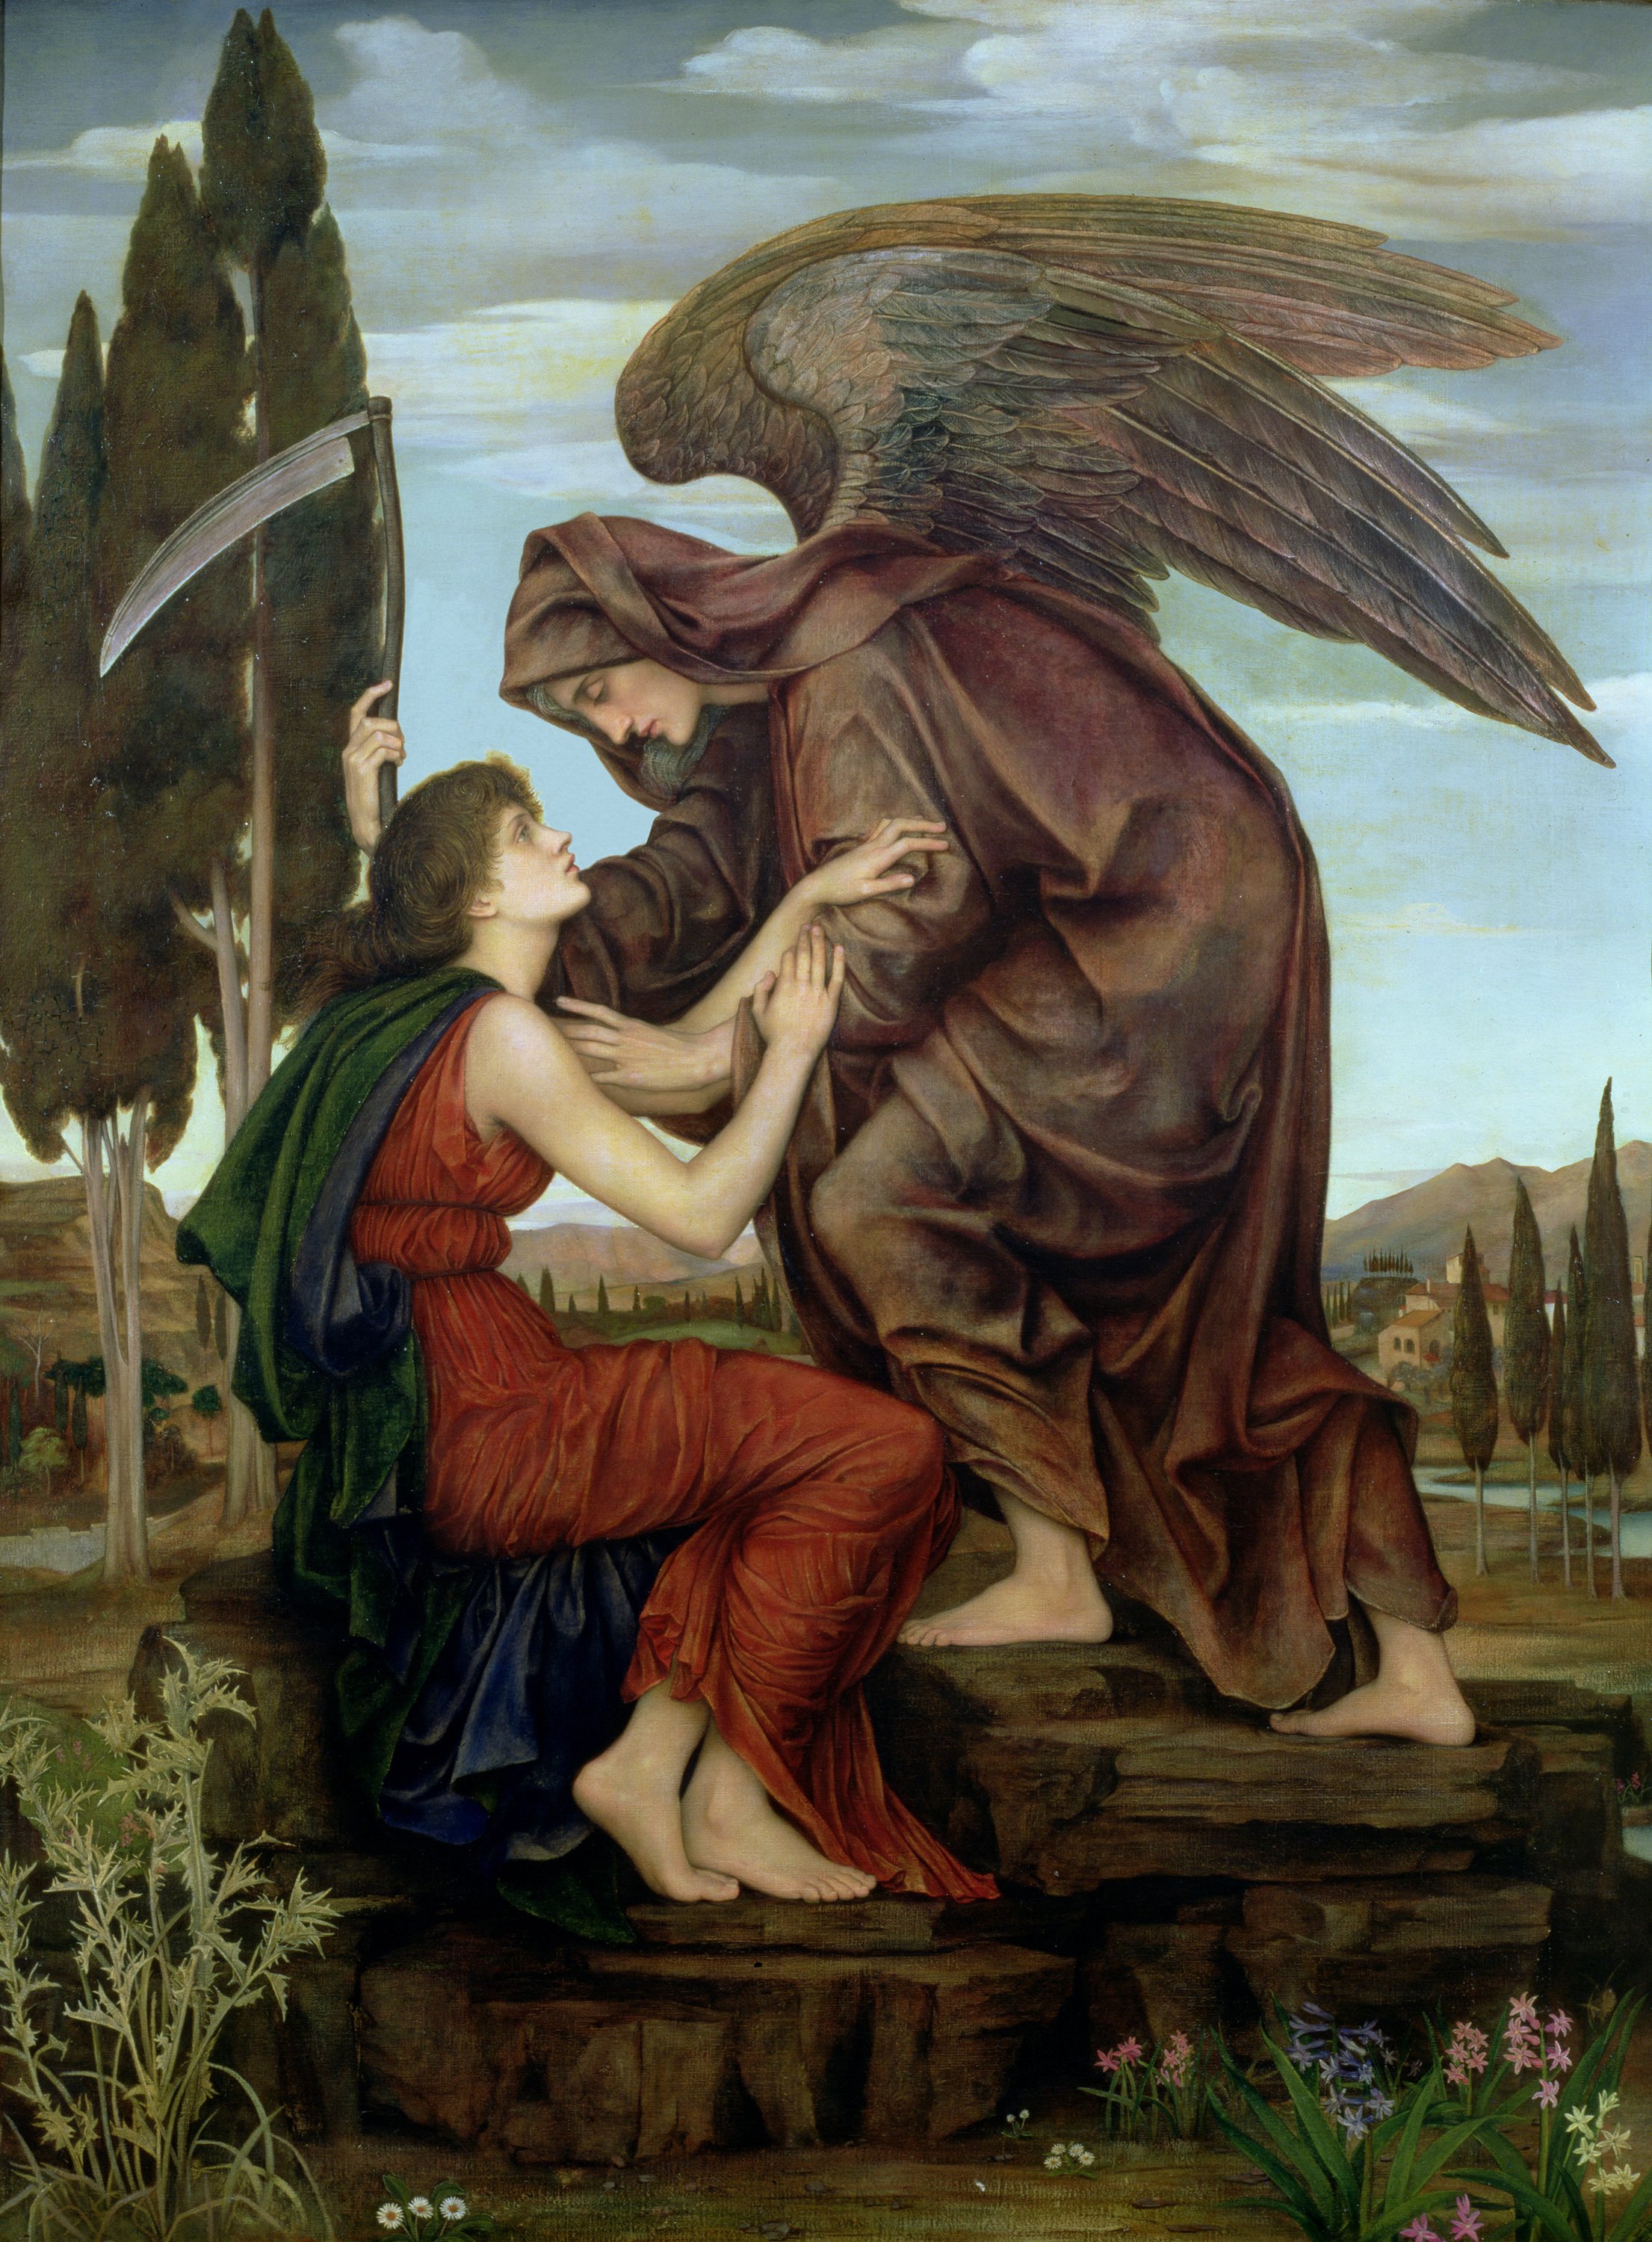 evelyn-de-morgan-the-angel-of-death-1881-trivium-art-history.jpg